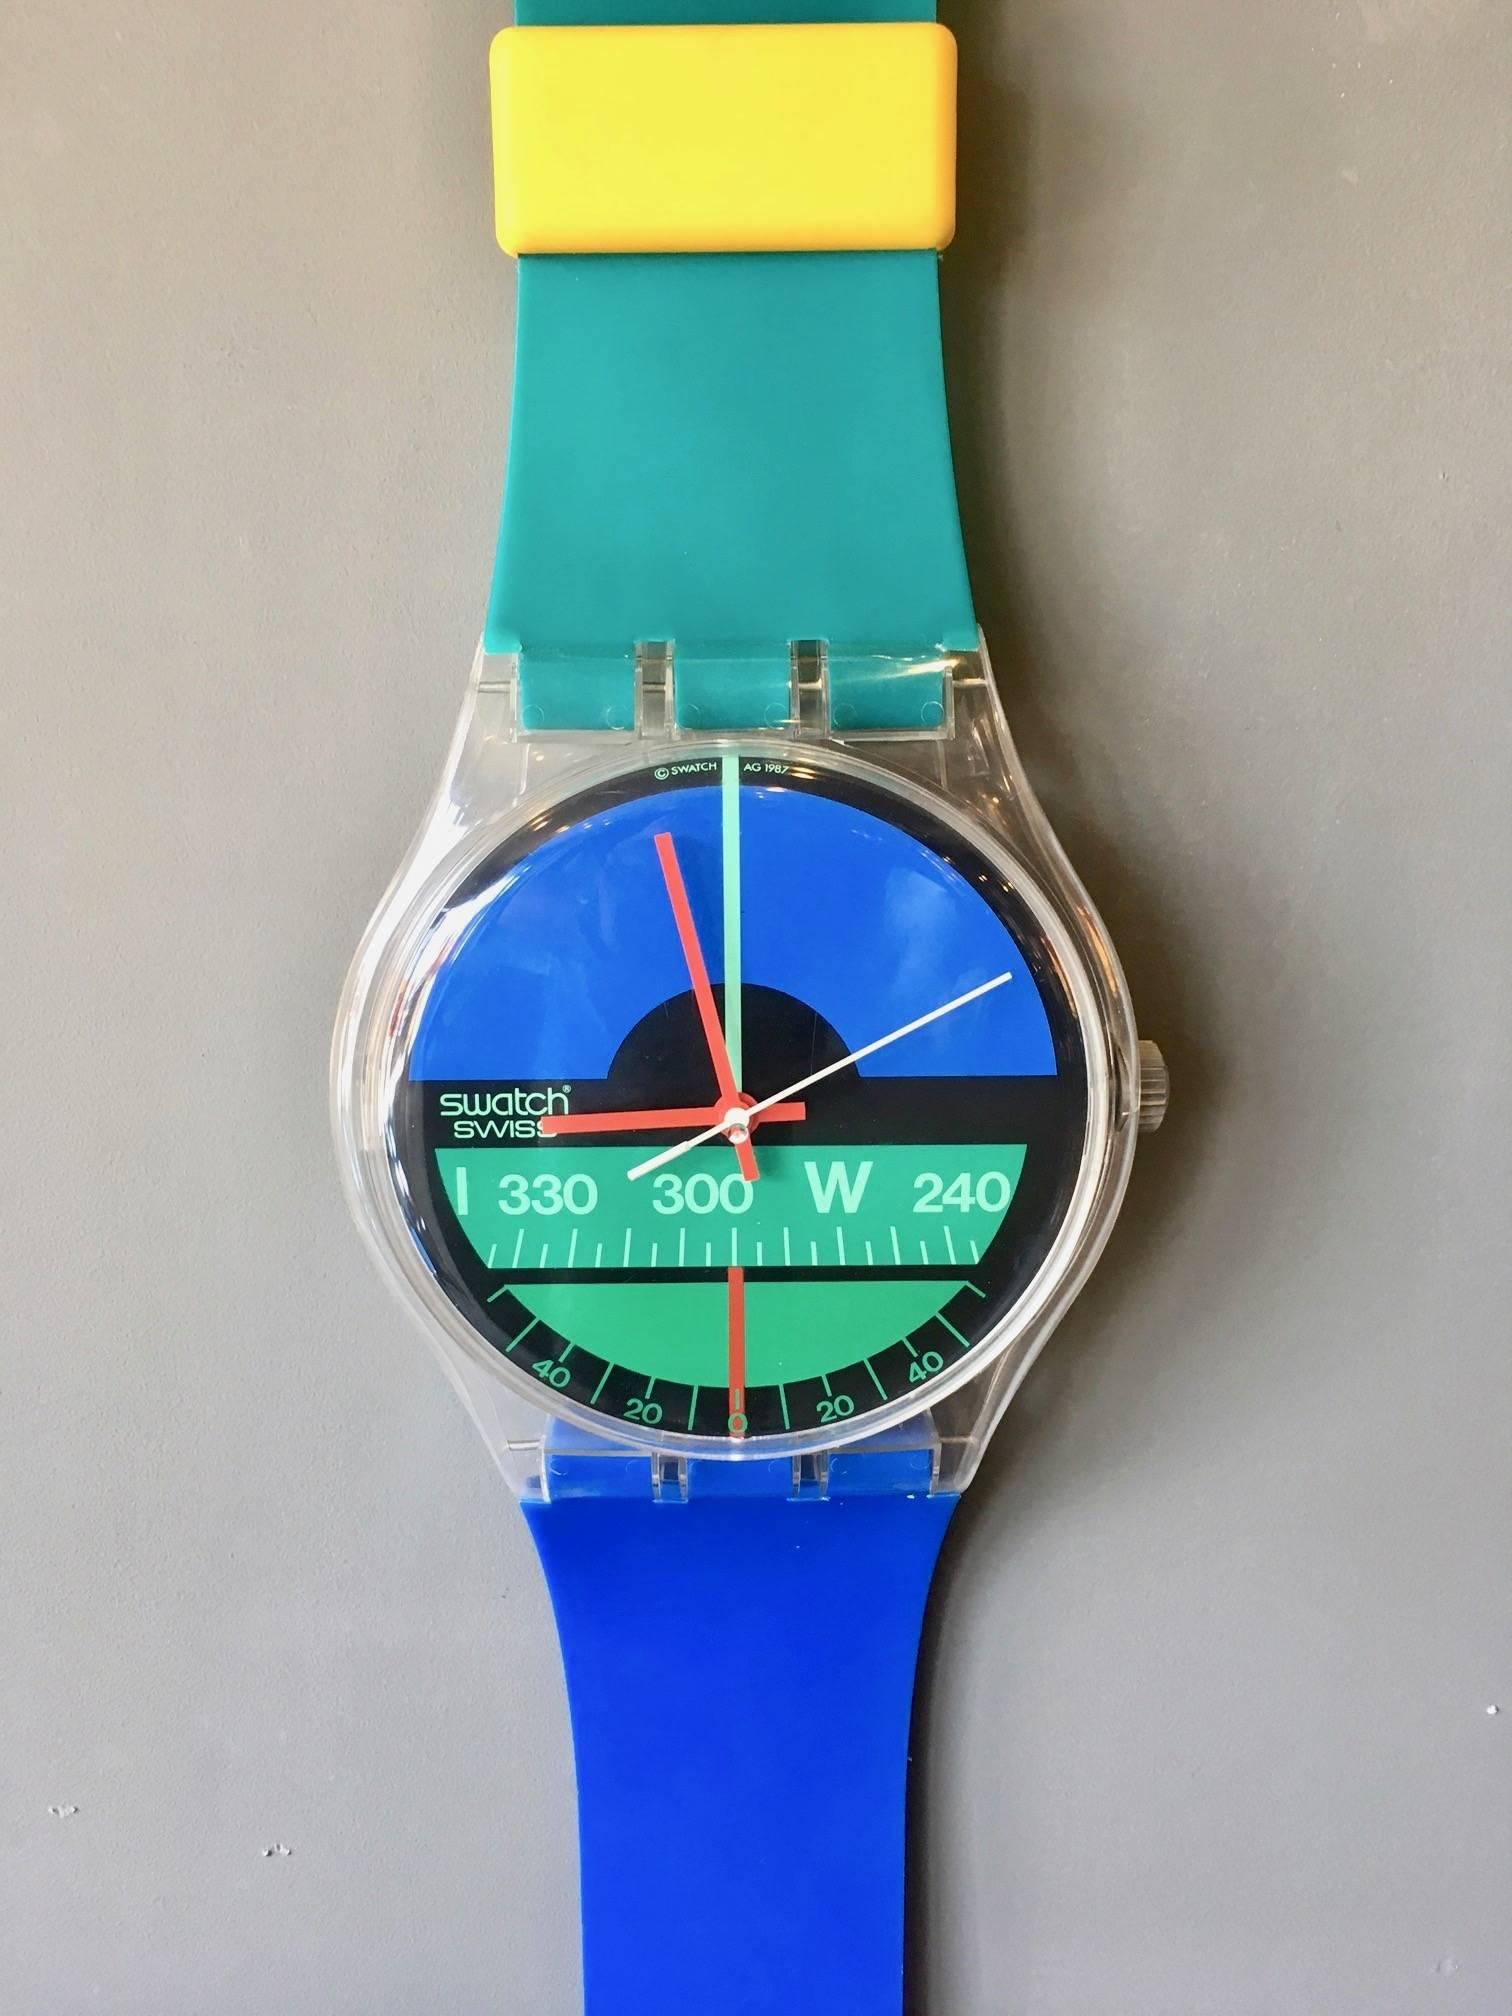 wall swatch watch